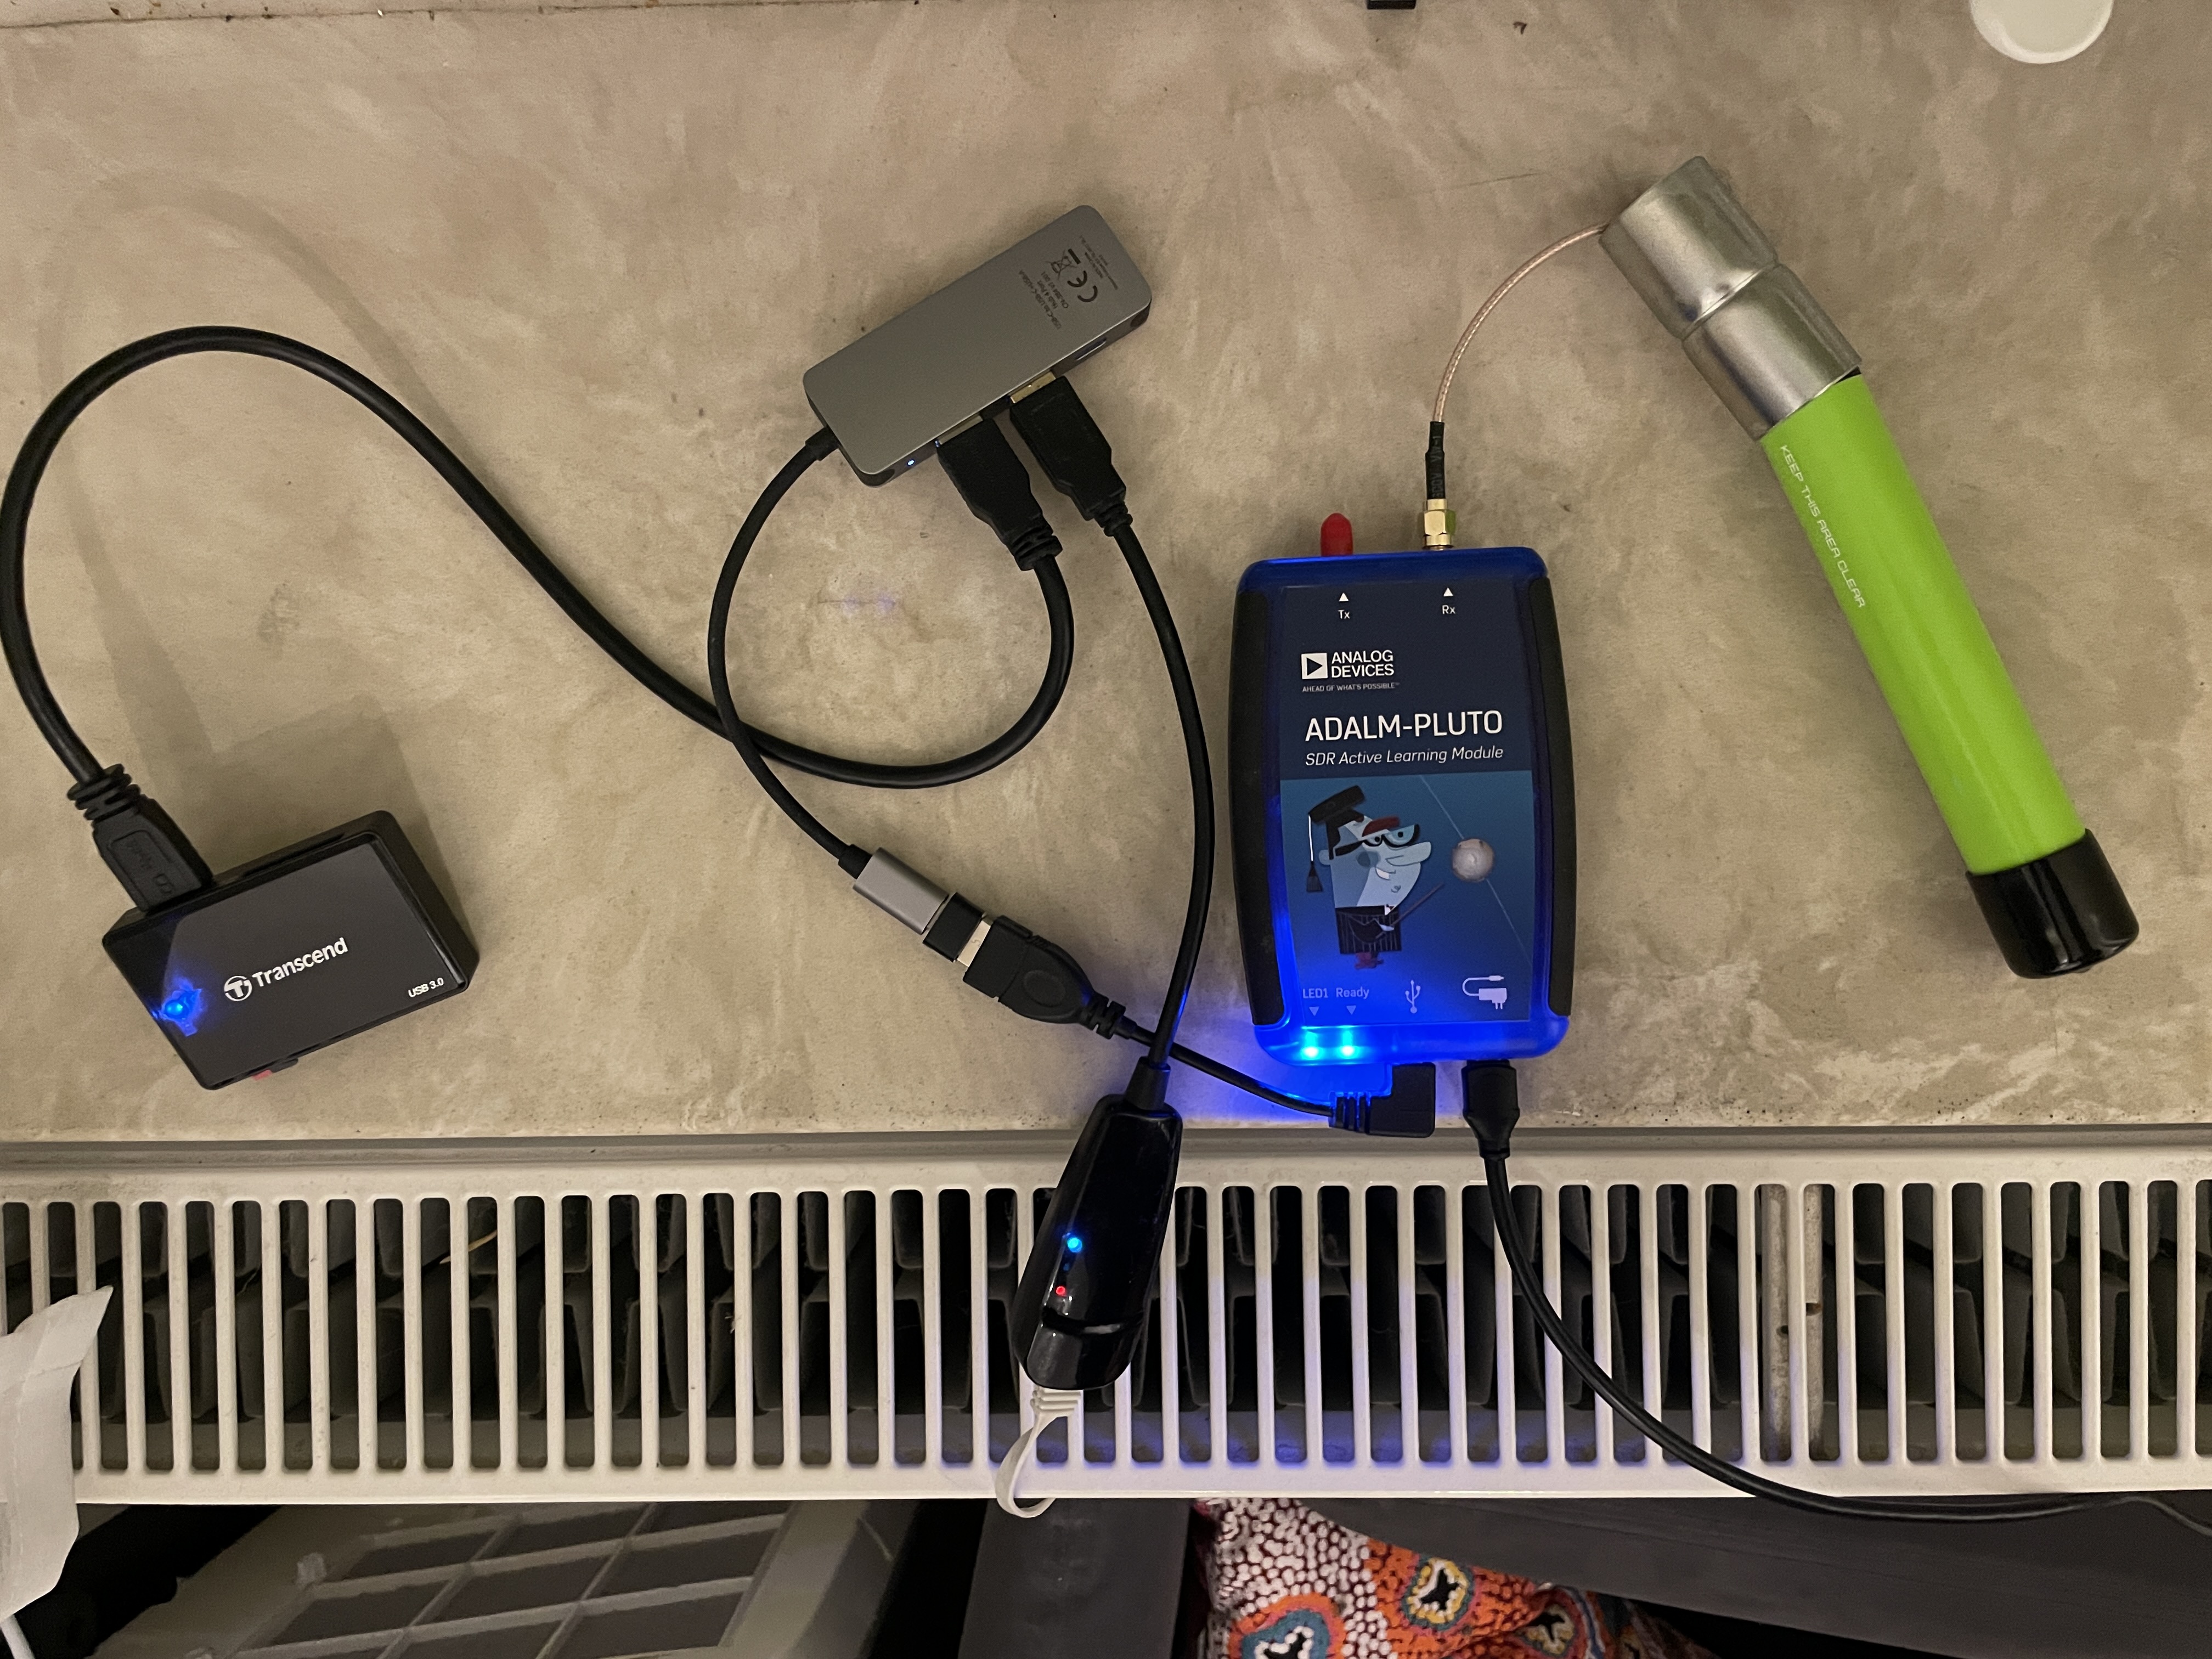 Setup on a windowsill, PlutoSDR with external ADSB antenna, USB-OTG adapter to USB-C hub, USB card reader and USB ethernet adapter